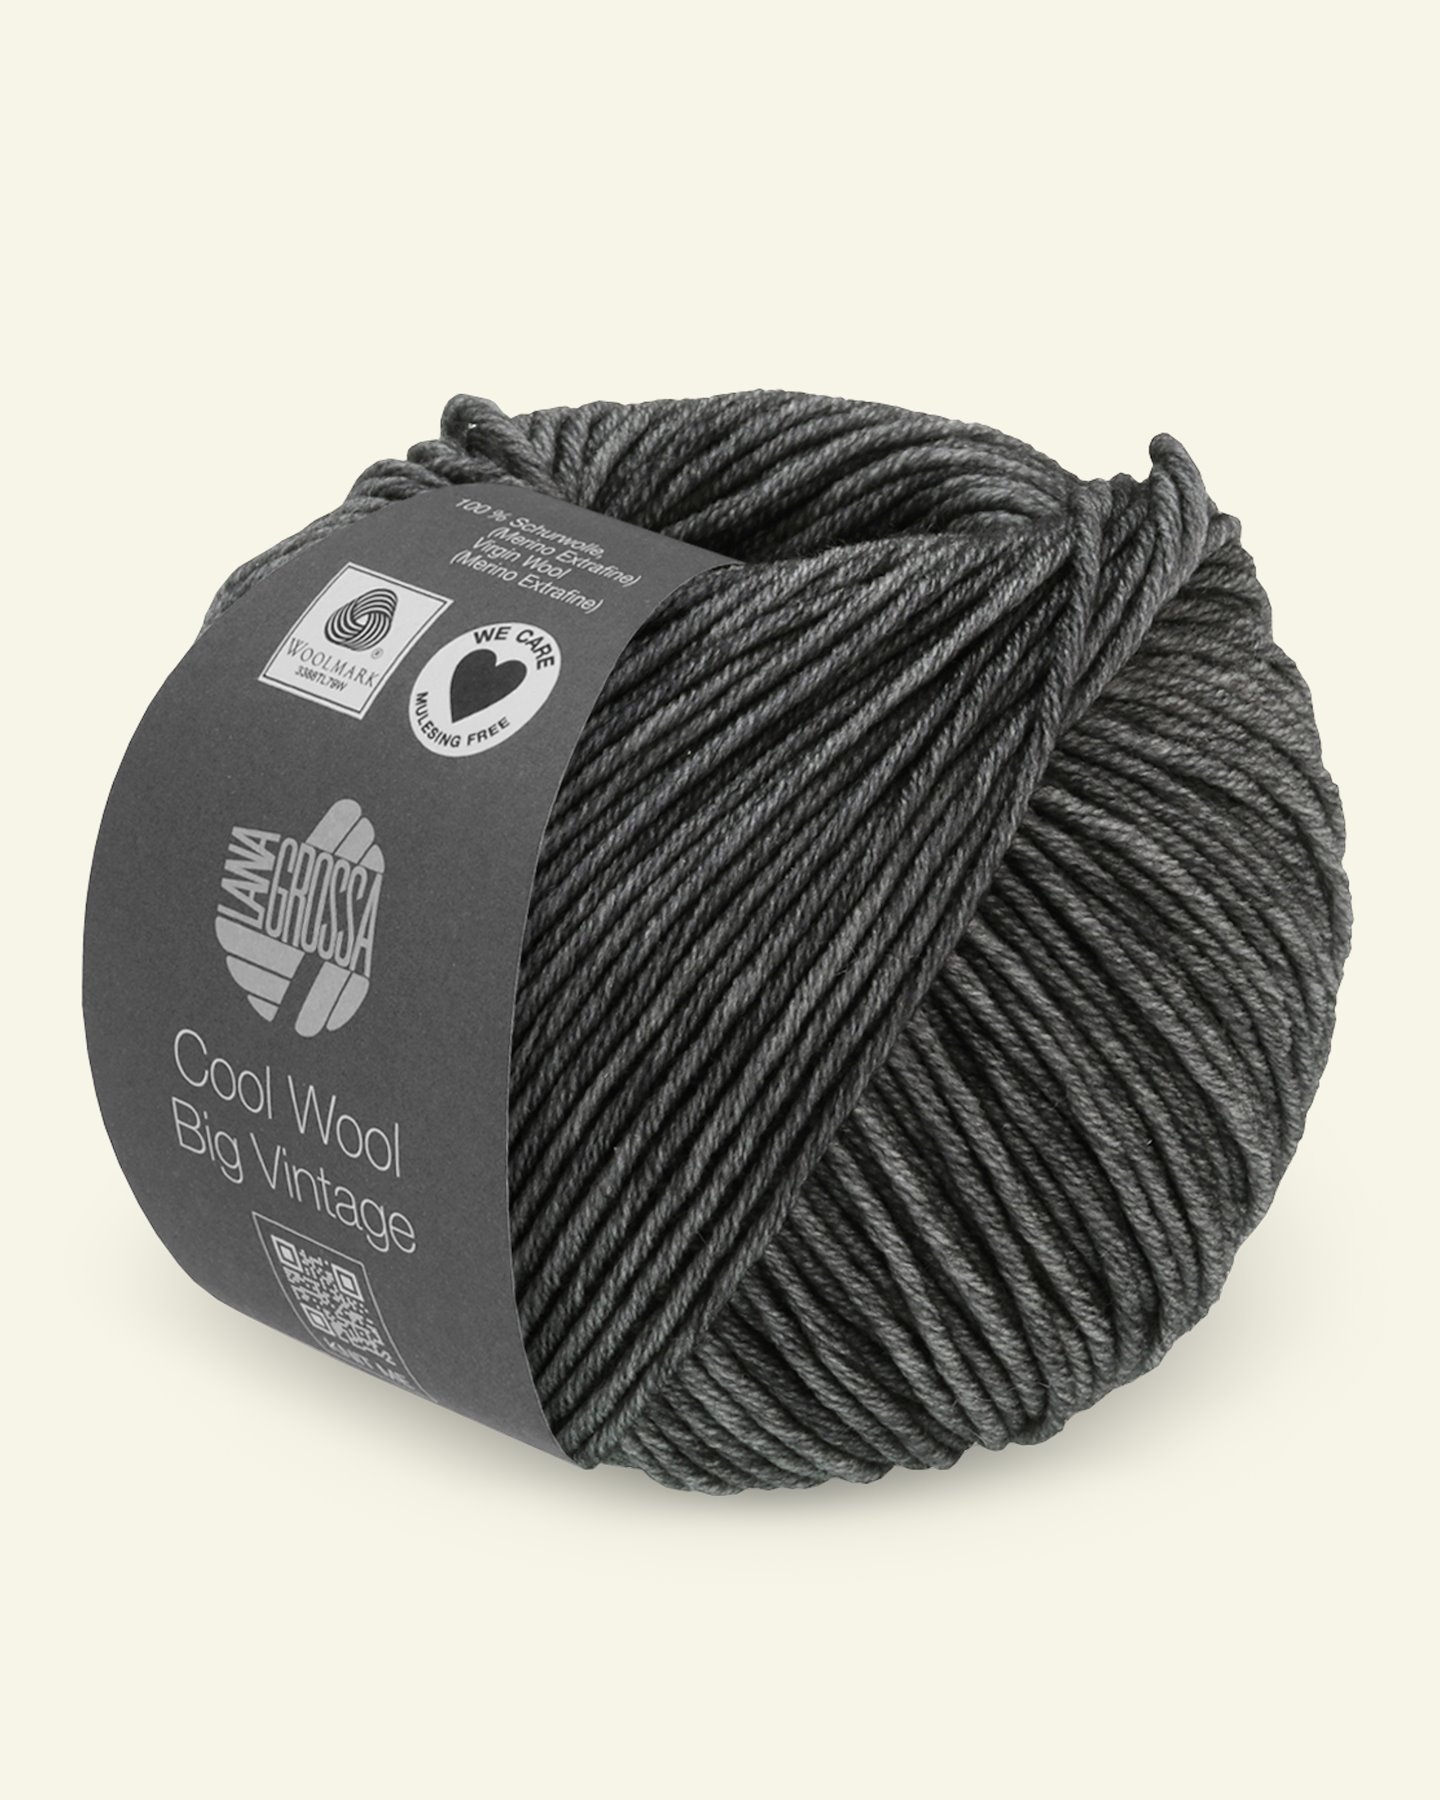 Lana Grossa, extrafine merino wool yarn "Cool Wool Big Vintage", dk grey 90001074_pack